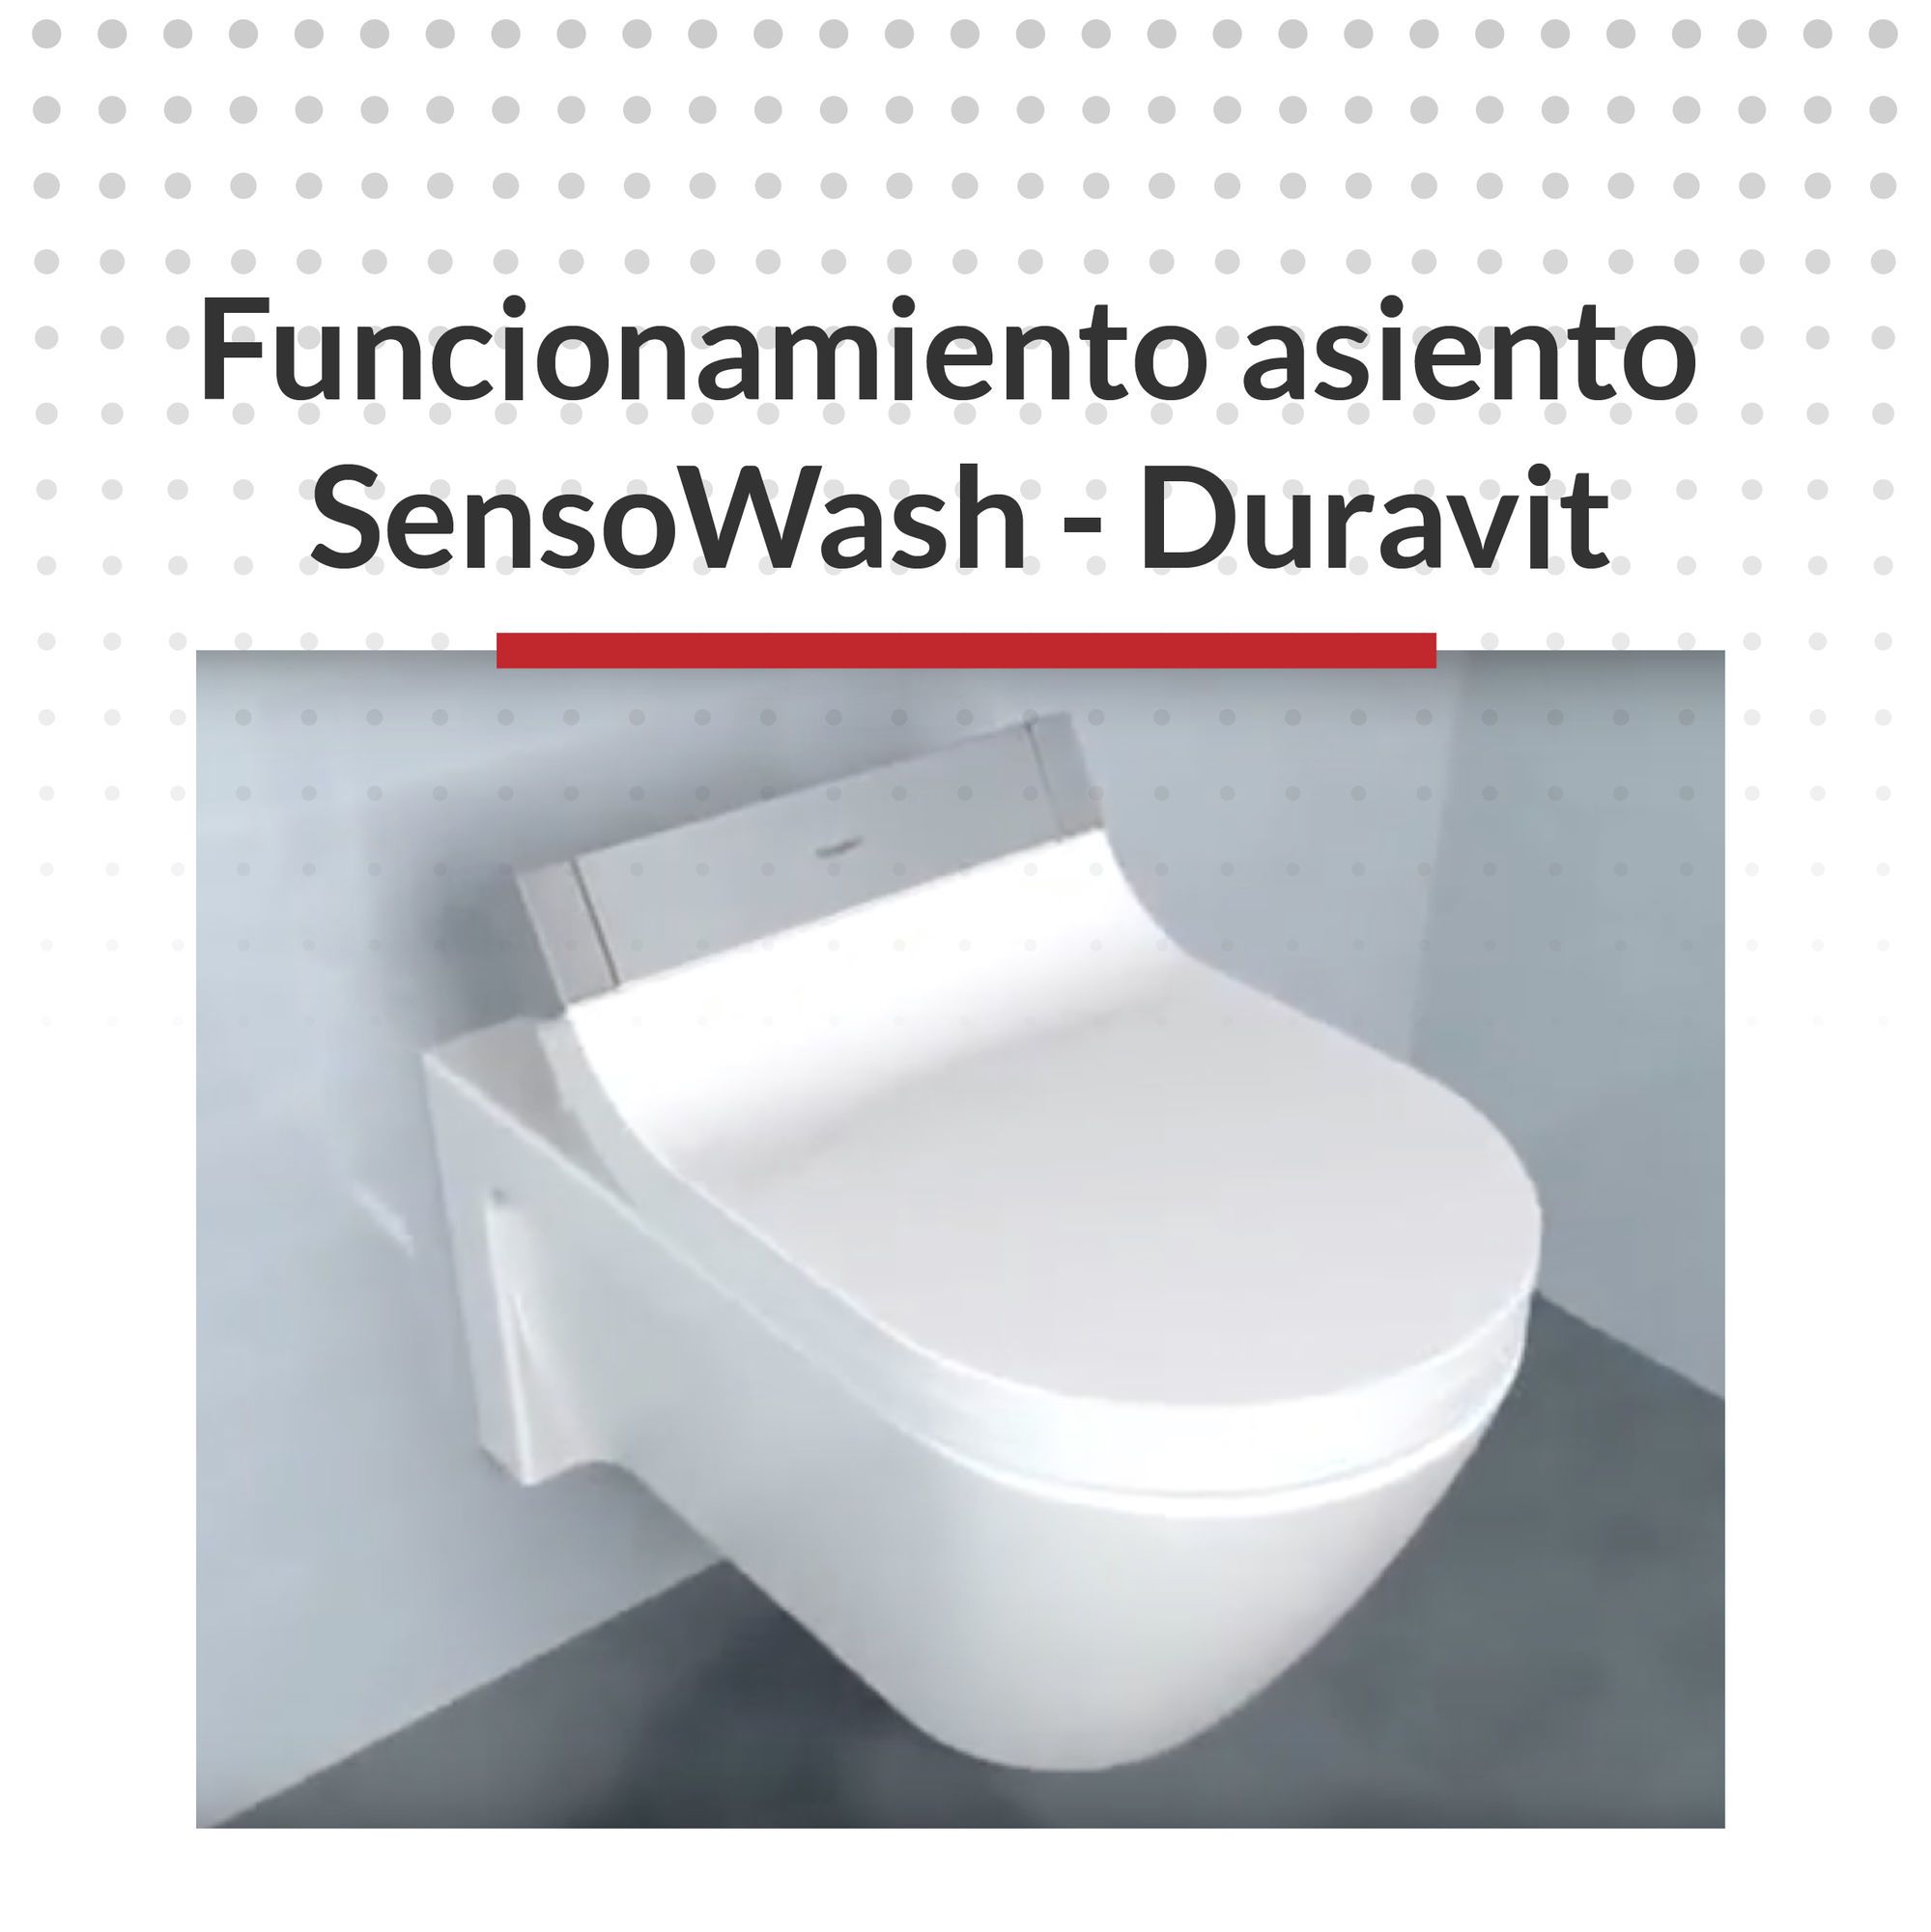 Funcionamiento asiento SensoWash - Duravit